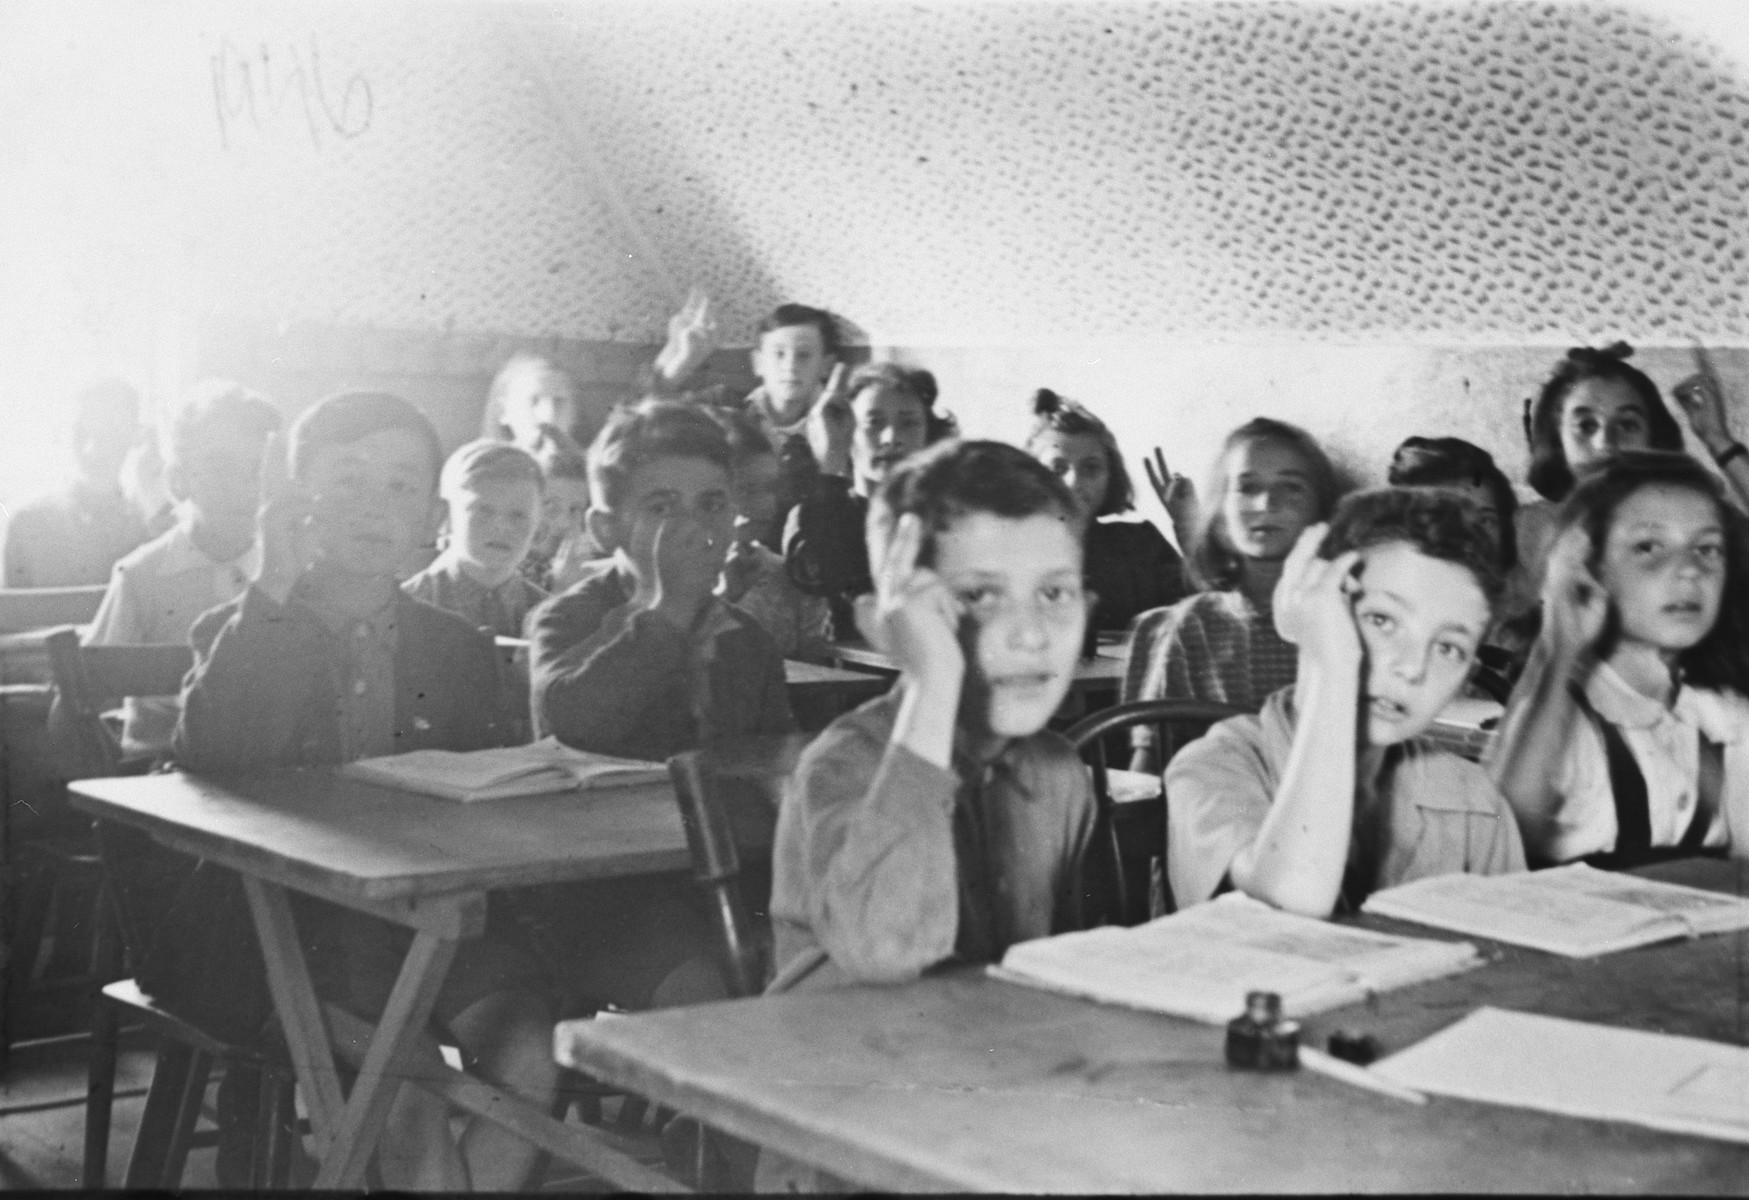 Children Sit At Their Desks And Raise Their Hands In A School In